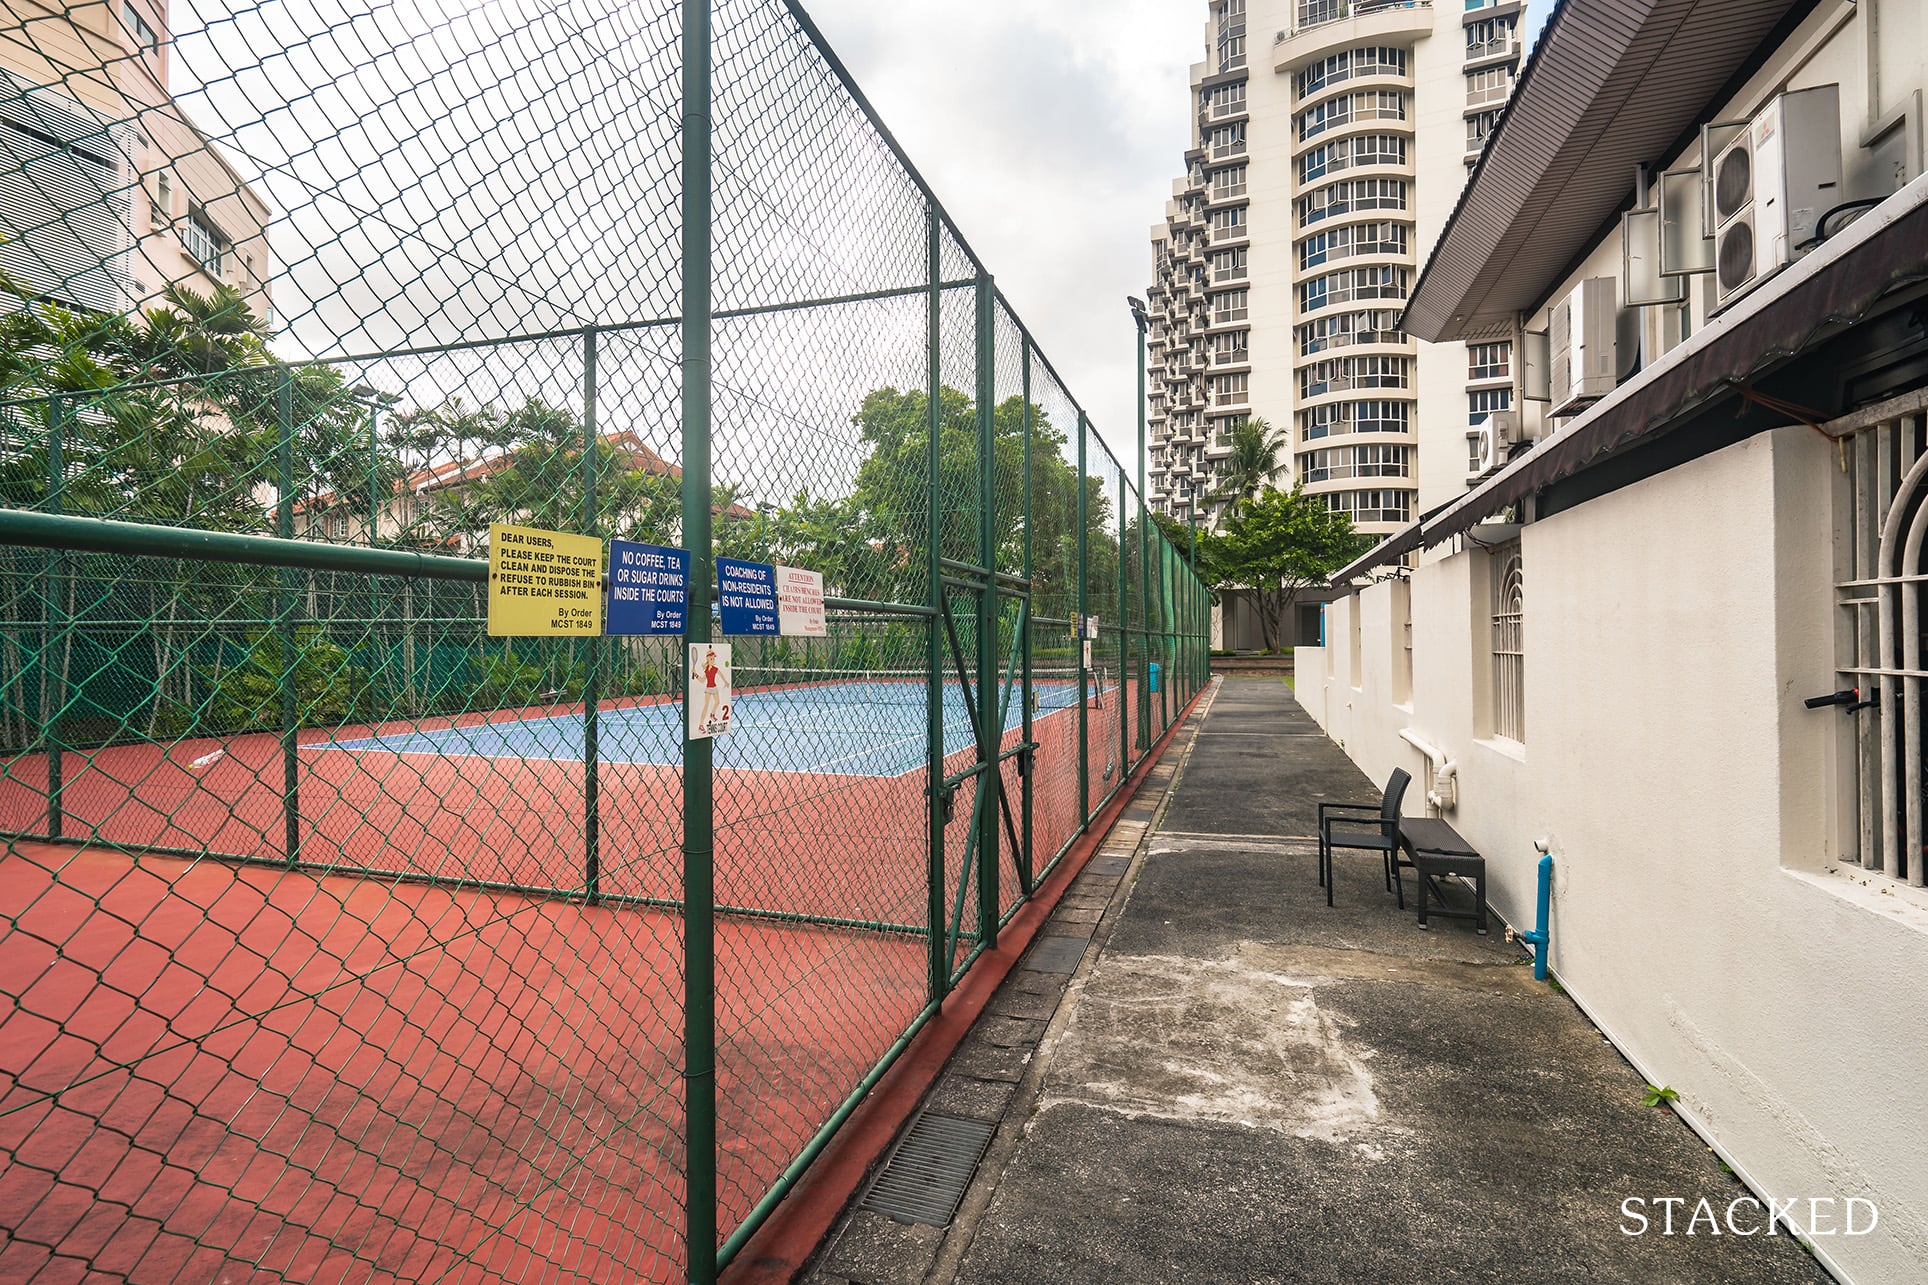 bullion park tennis court